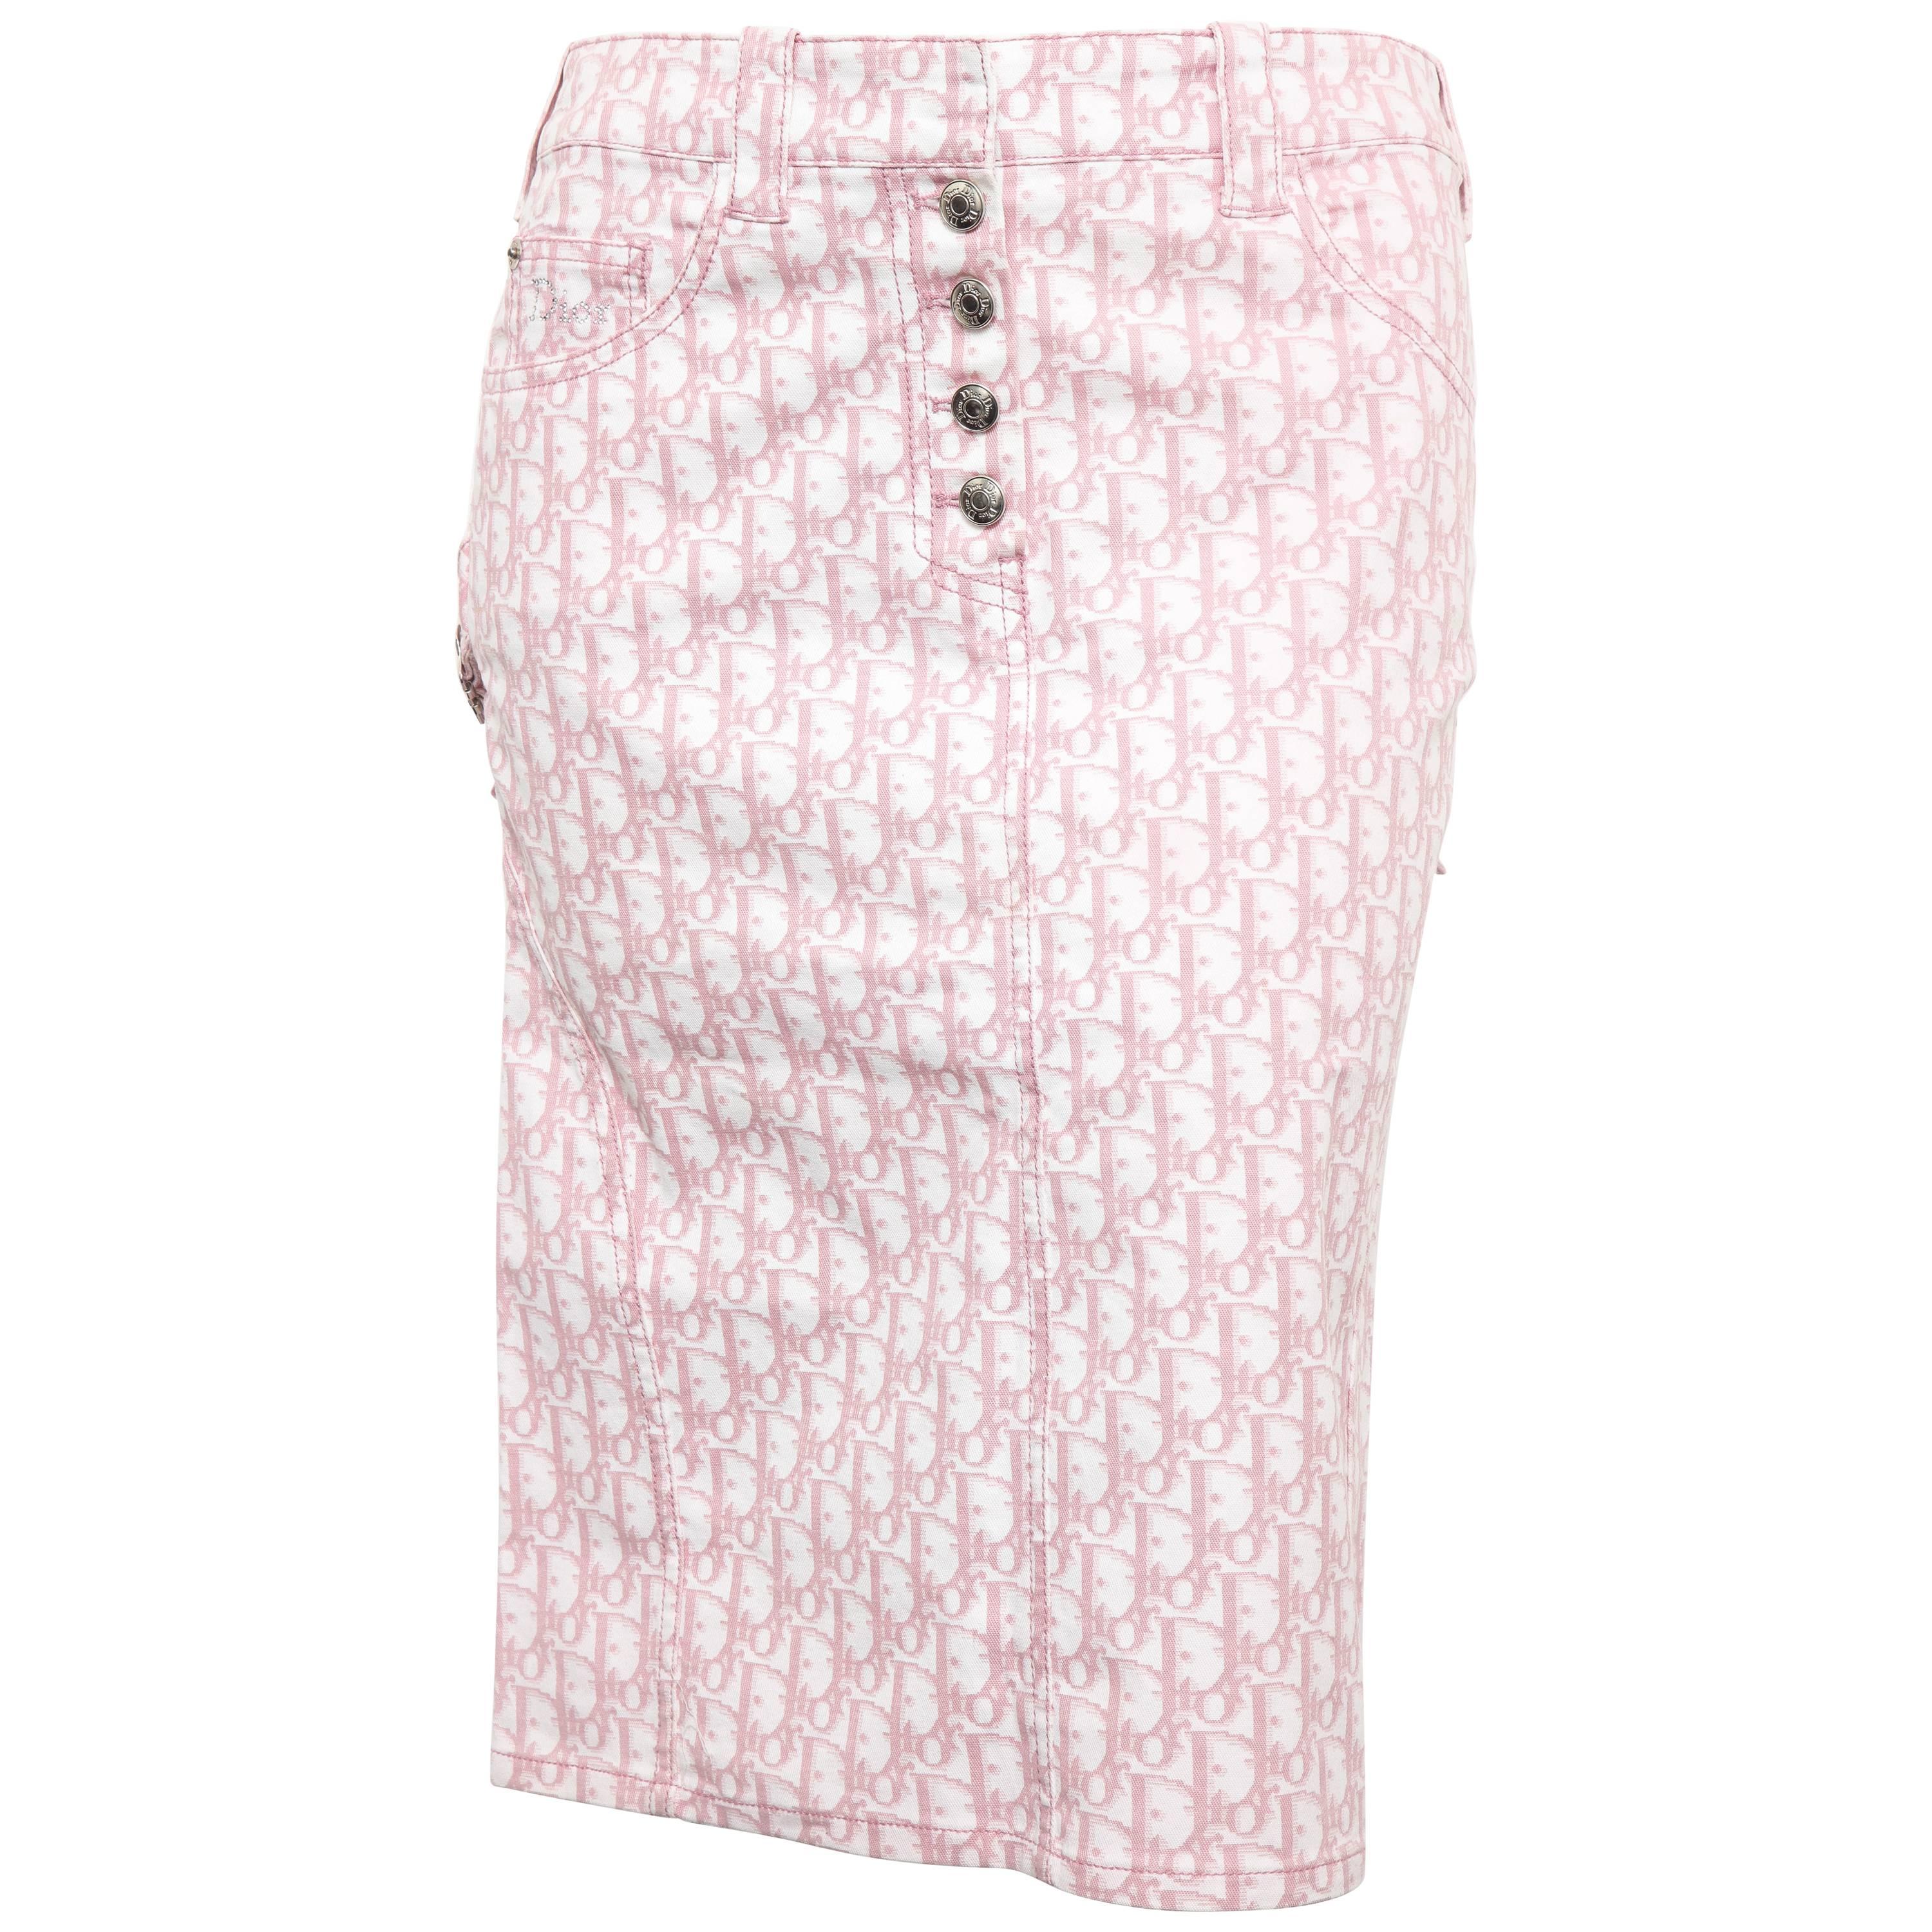 John Galliano for Christian Dior Pink Trotter Logo Pencil Skirt im Angebot